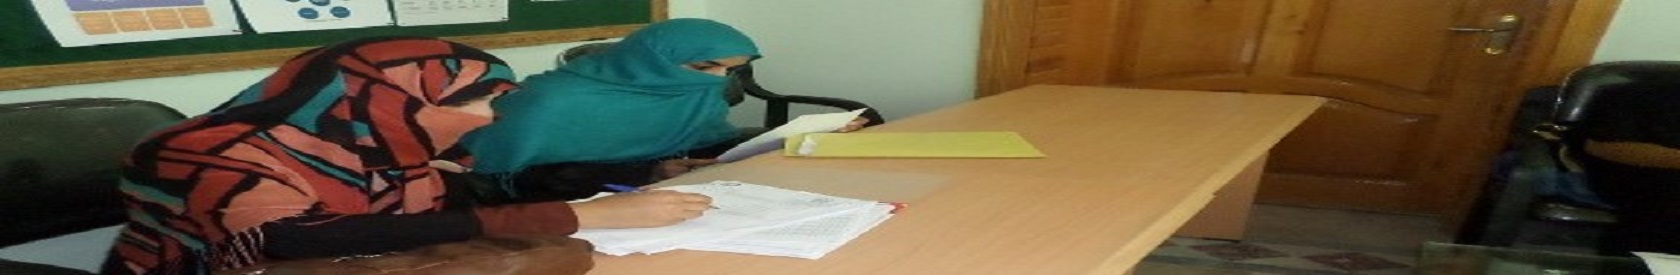 Accounting training program for 40 refugee women